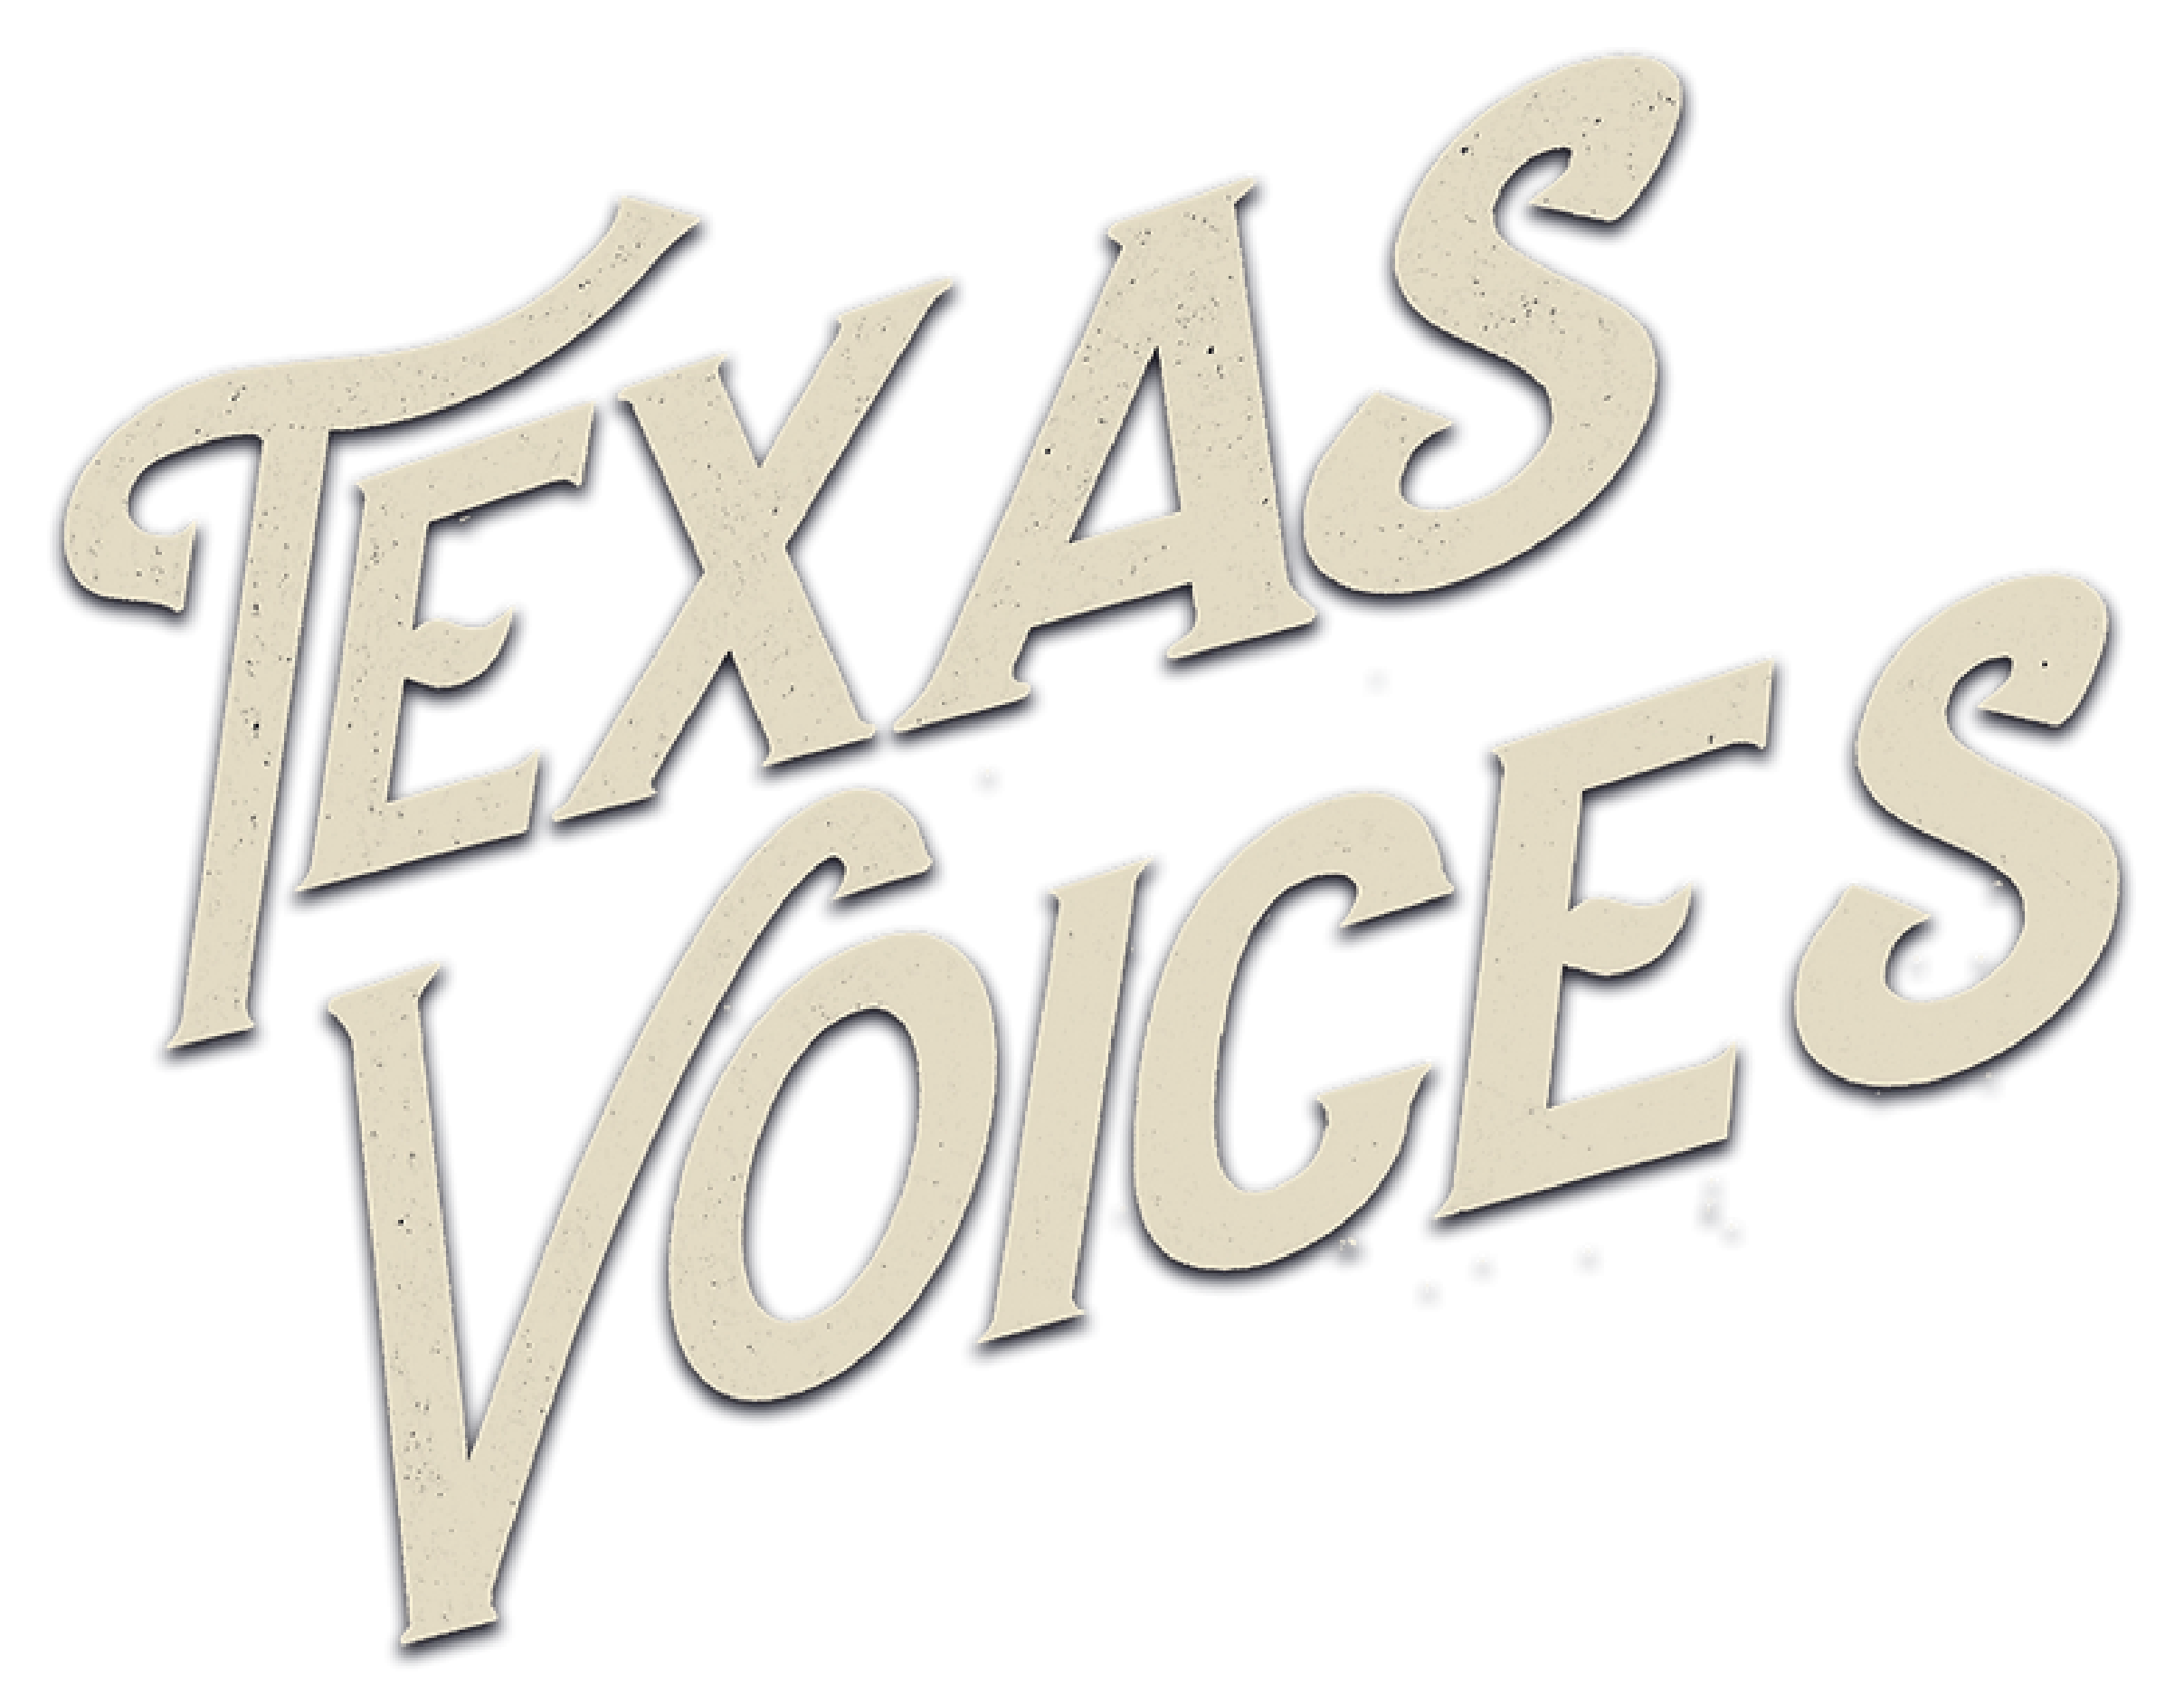 Texas Voices"